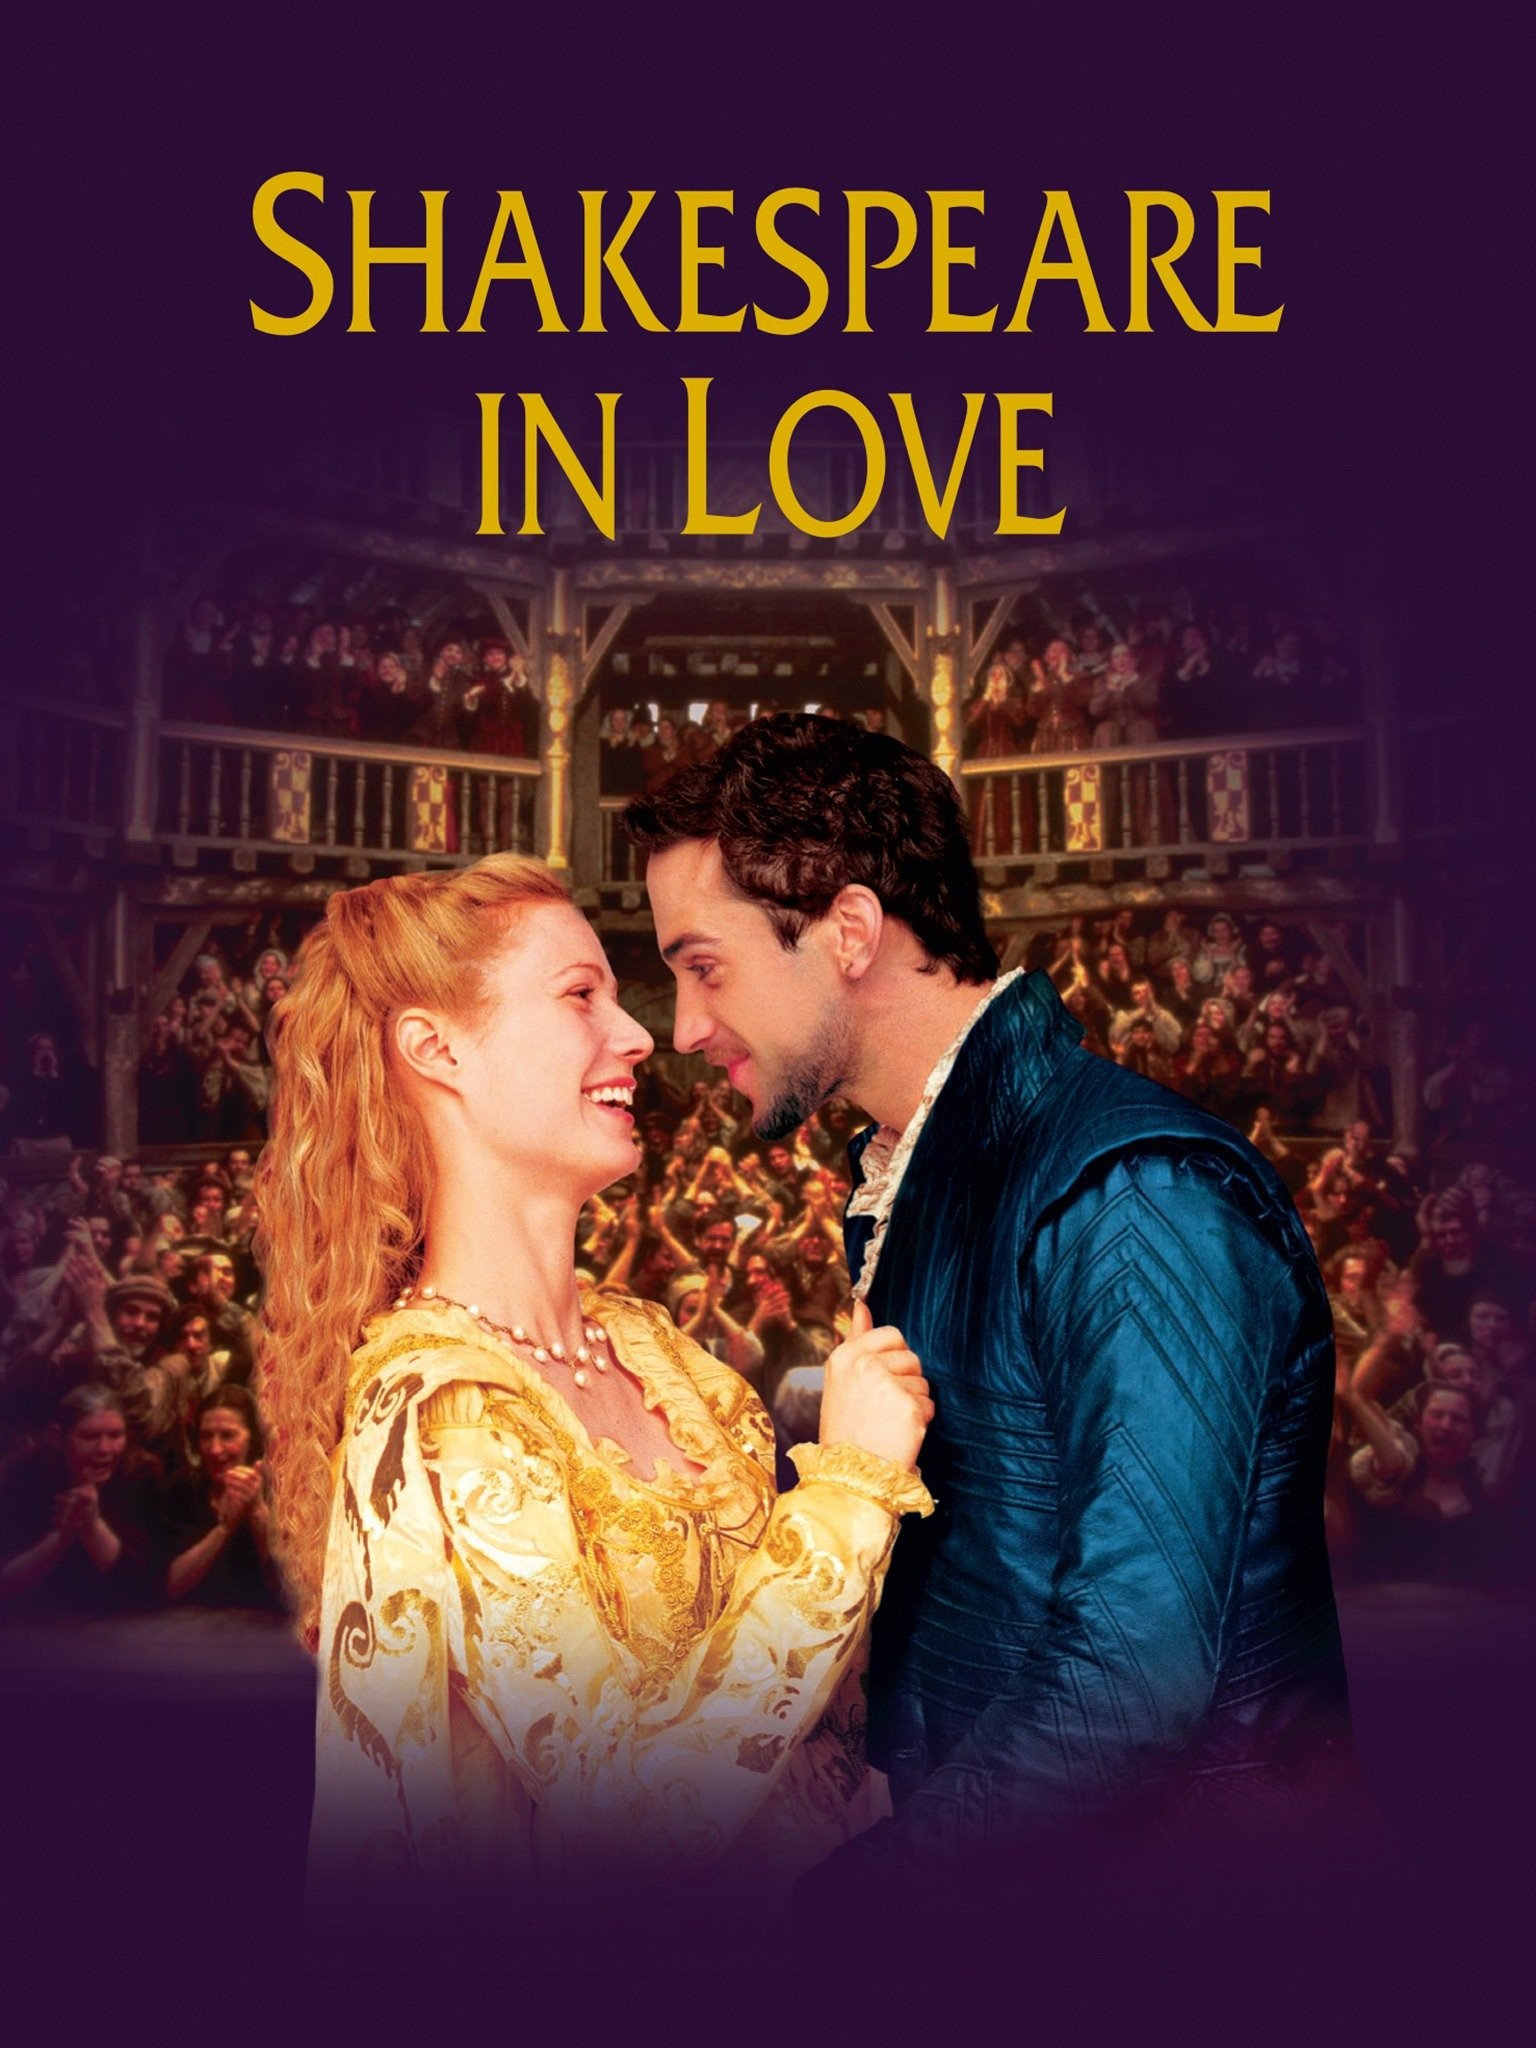 Shakespeare para apaixonados - Allan Percy